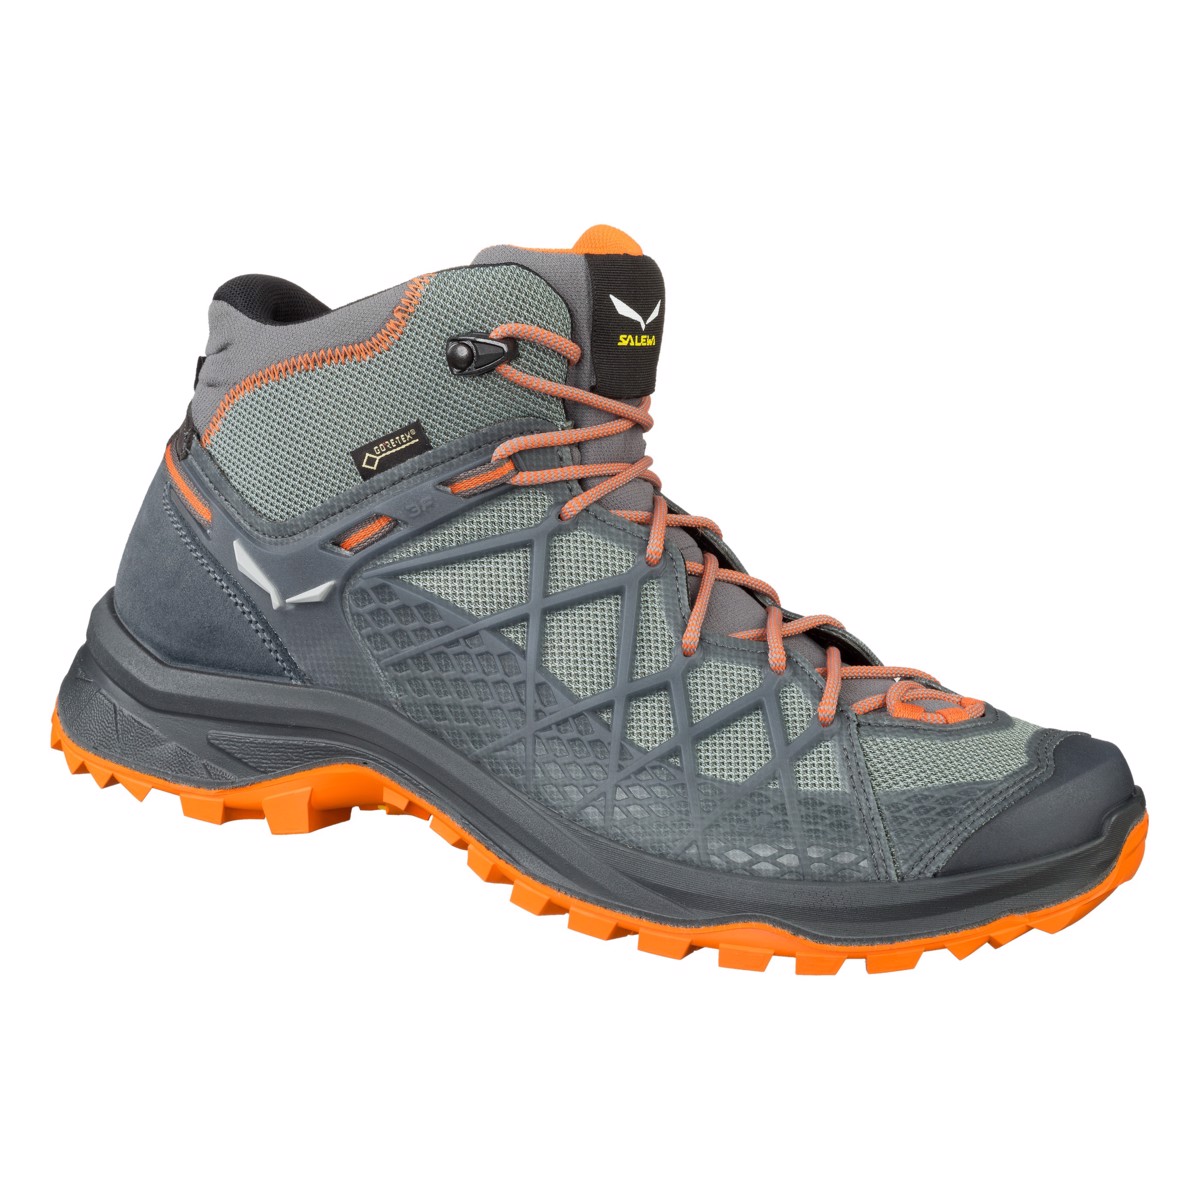 Salewa Gore-Tex. Ботинки Salomon гортекс. Гортекс Biom. Tecnica Ice way III Goretex Hiking Boots.